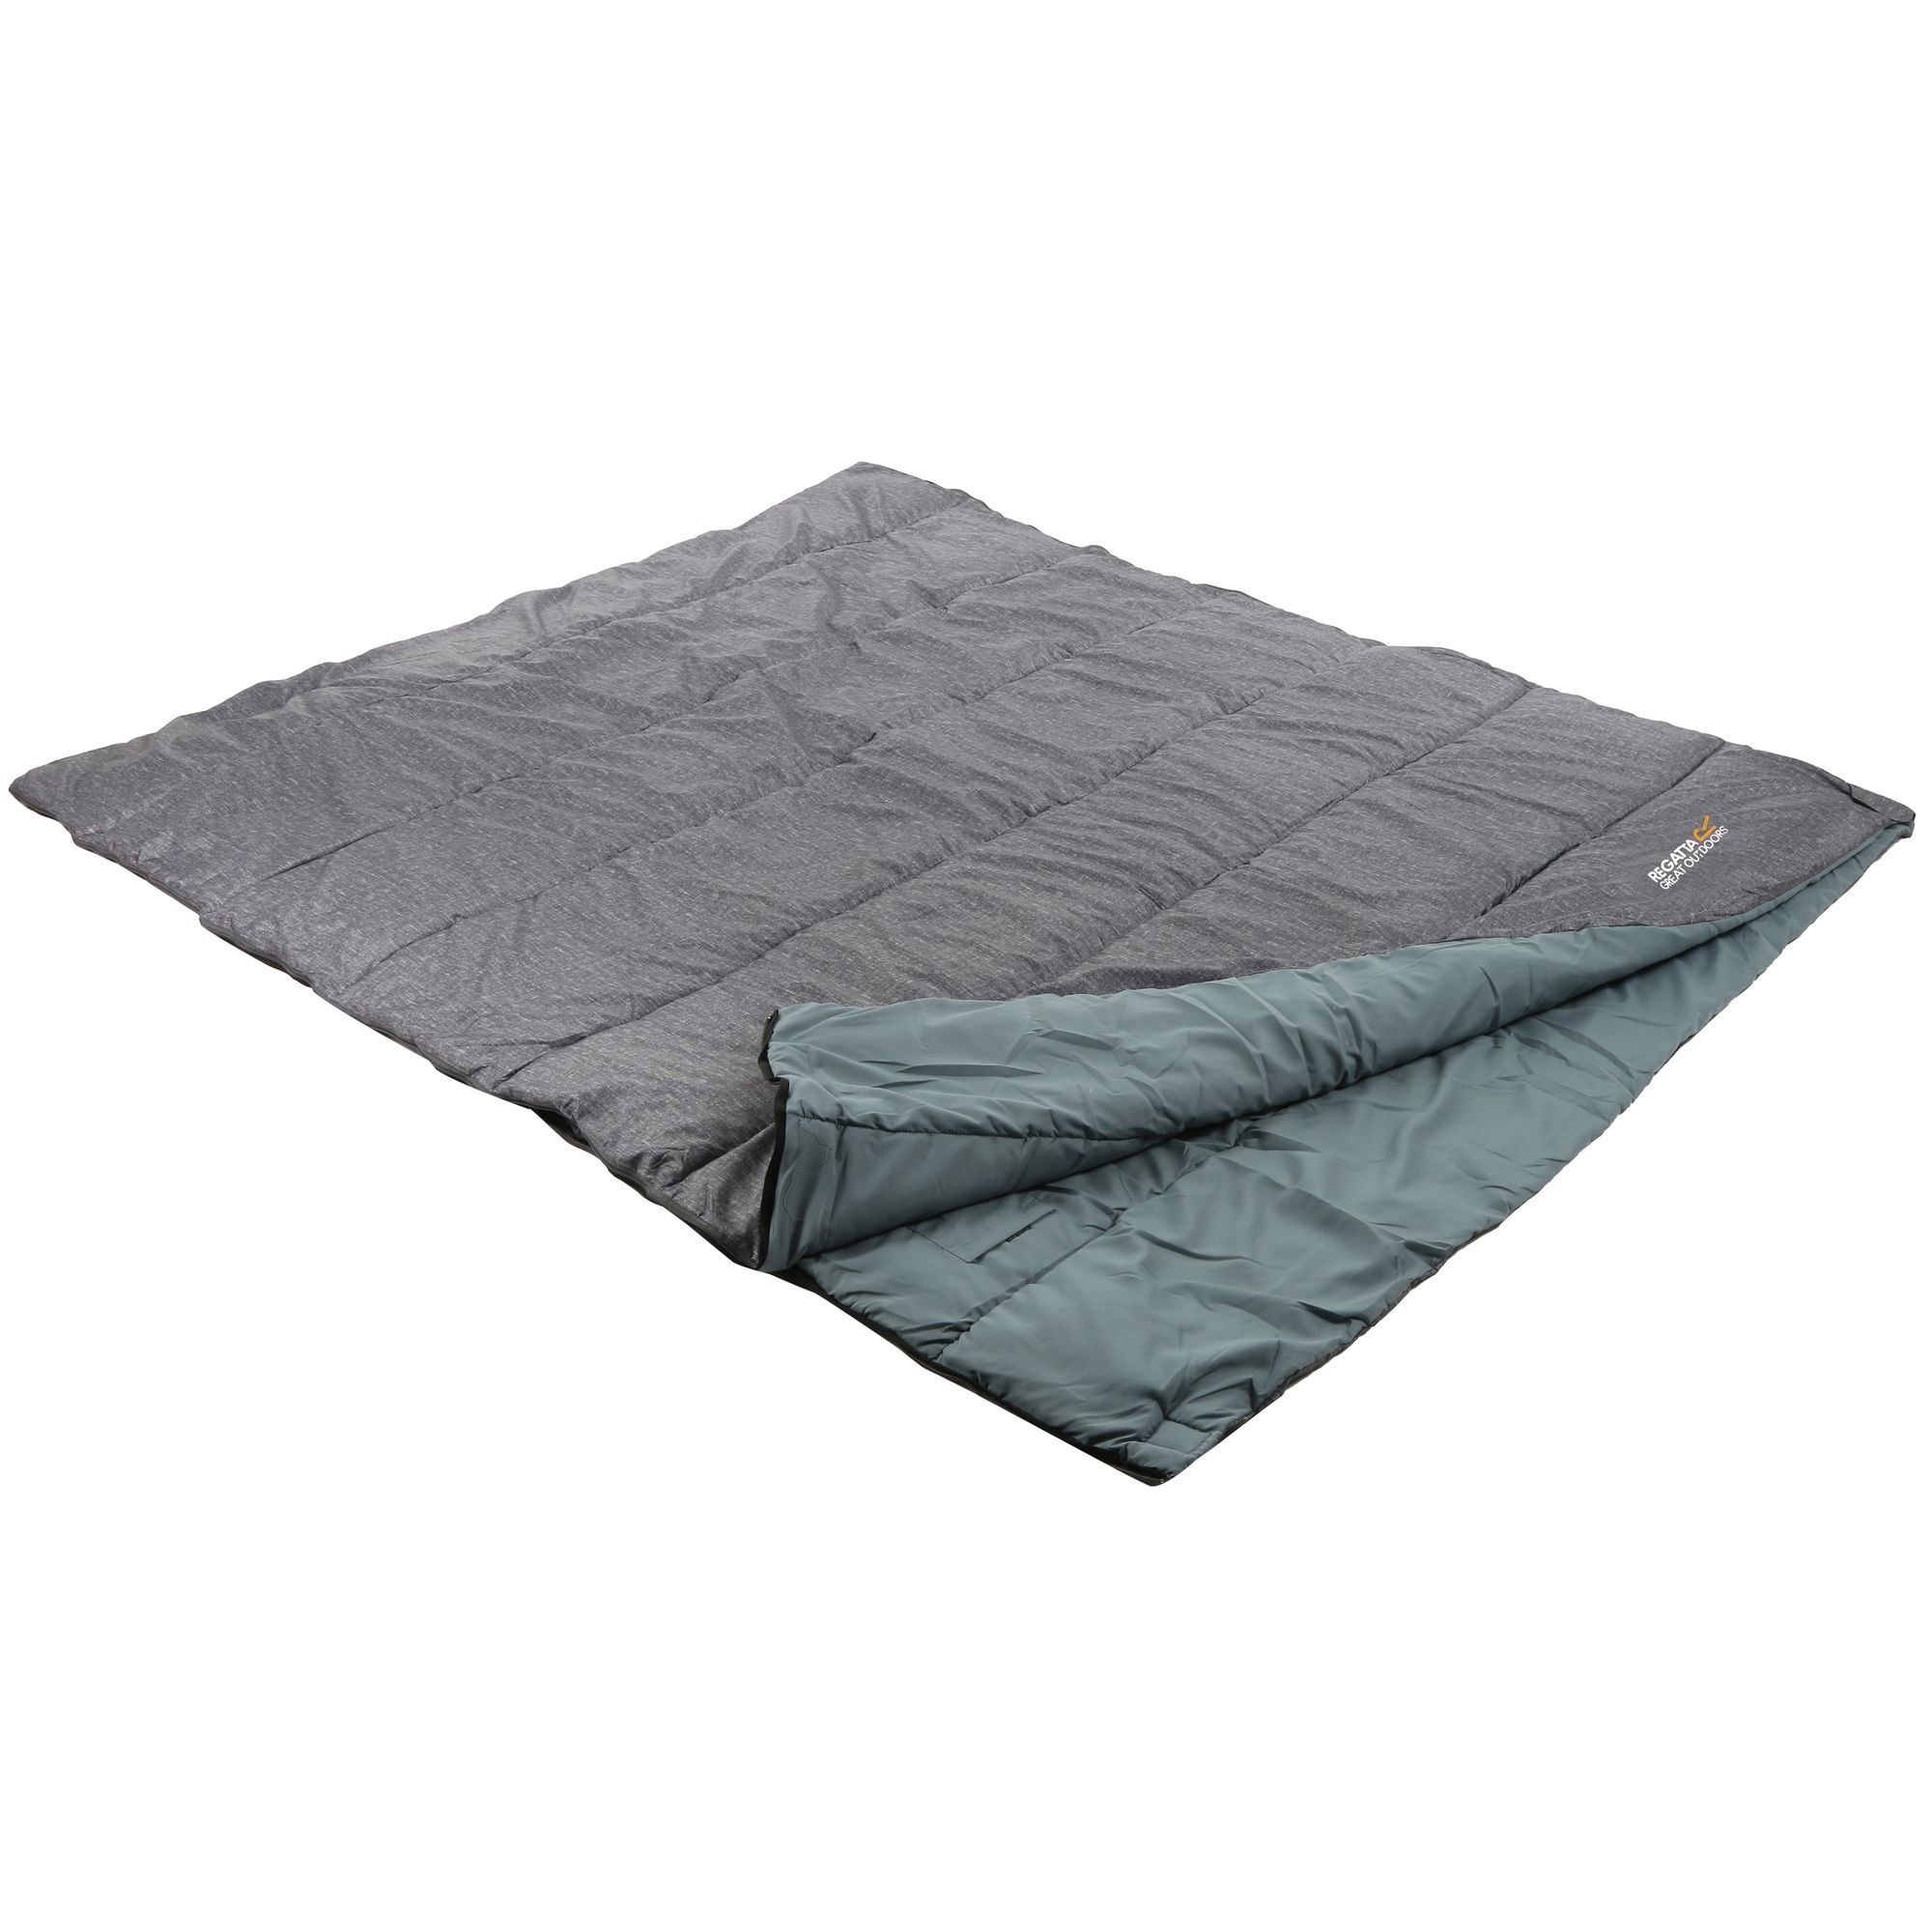 2 Season double rectangular sleeping bag. 100% Polyester.